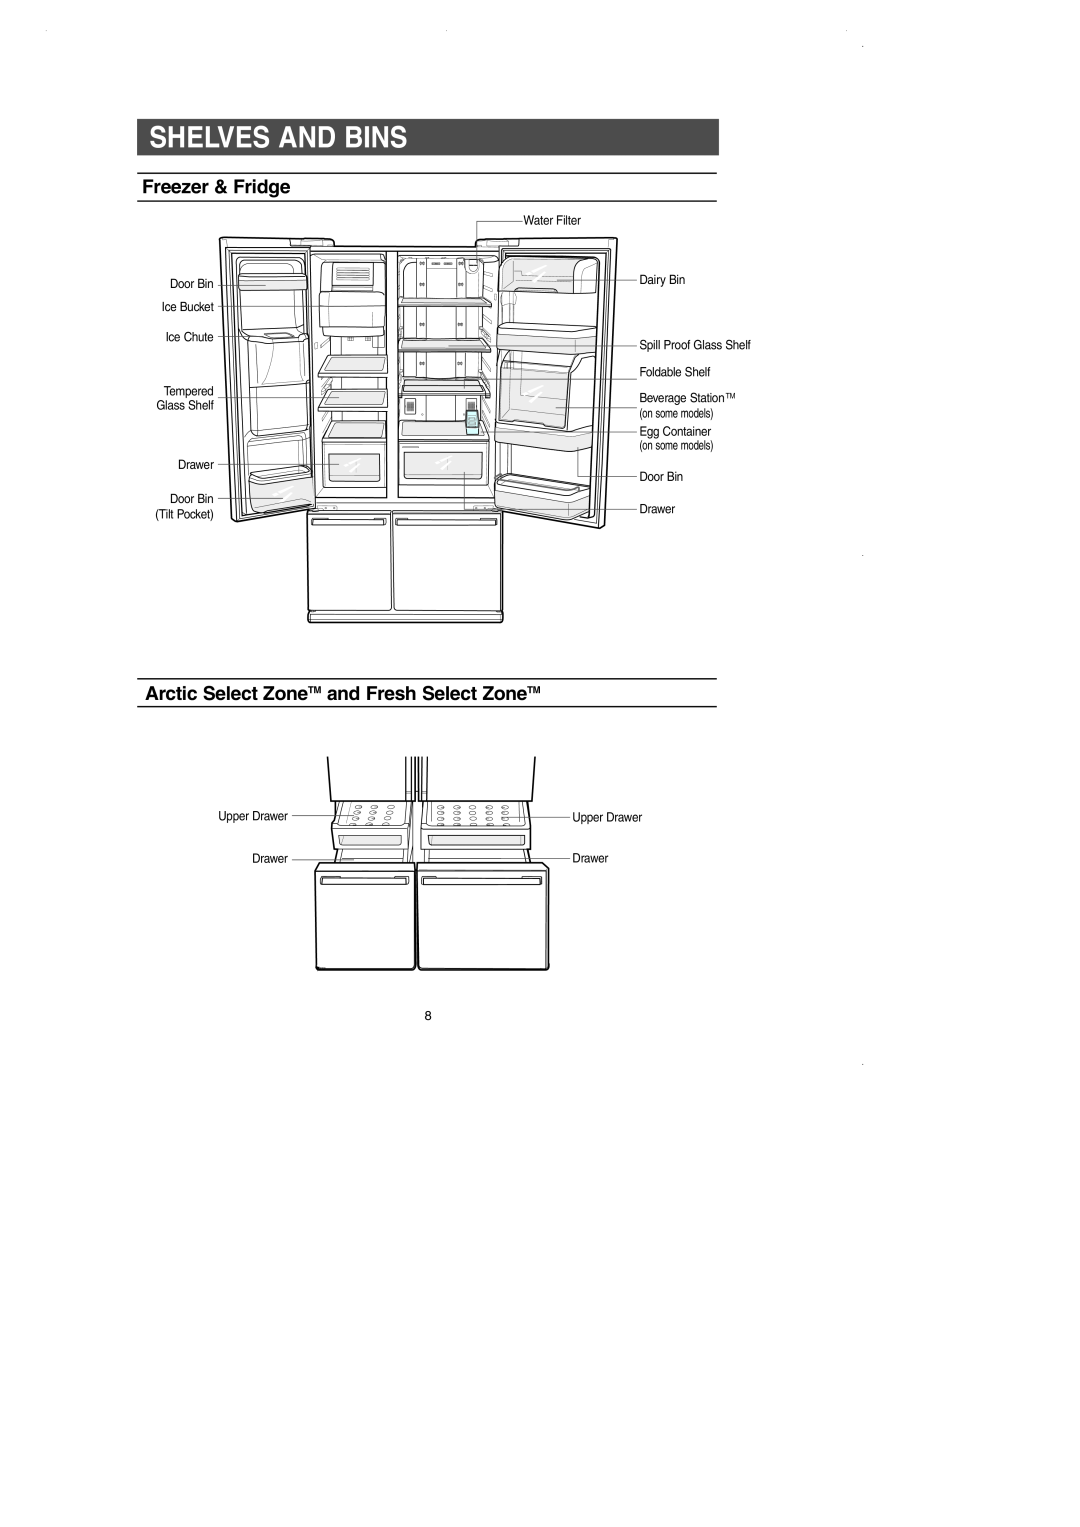 Samsung DA99-01225E owner manual Shelves And Bins, Freezer & Fridge, Arctic Select ZoneTM and Fresh Select ZoneTM 